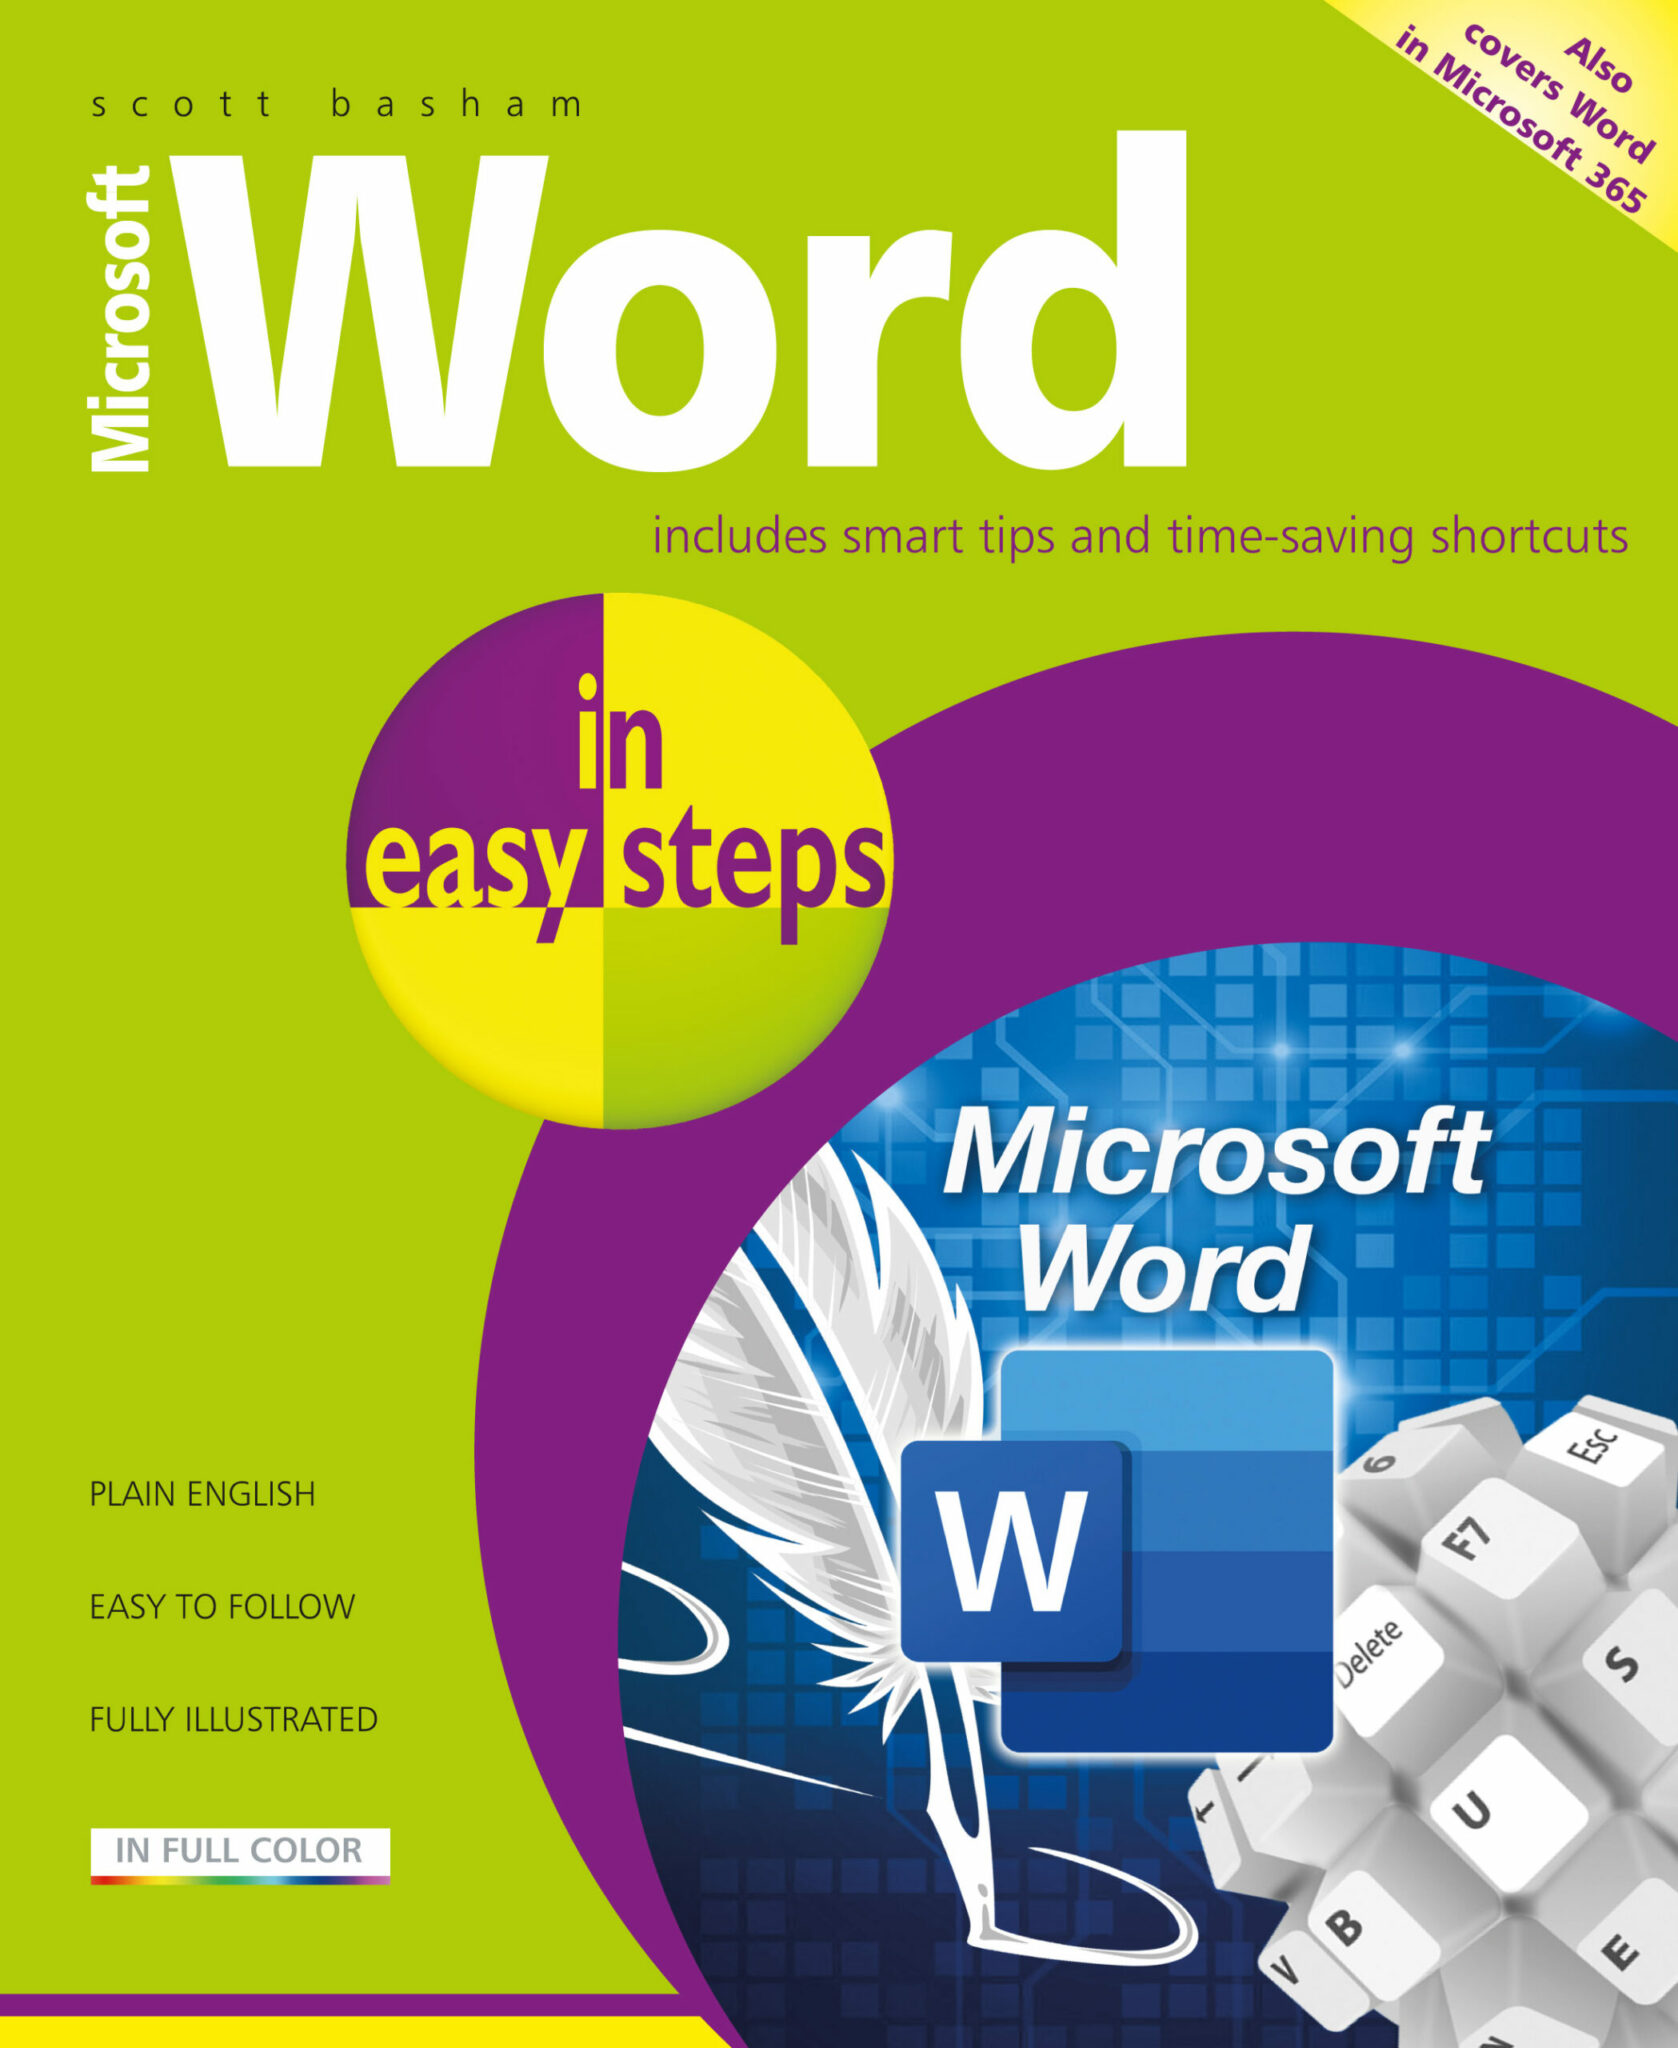 Microsoft Word in easy steps 9781840789348||Microsoft Word in easy steps 9781840789348|||Microsoft Word in easy steps 9781840789348